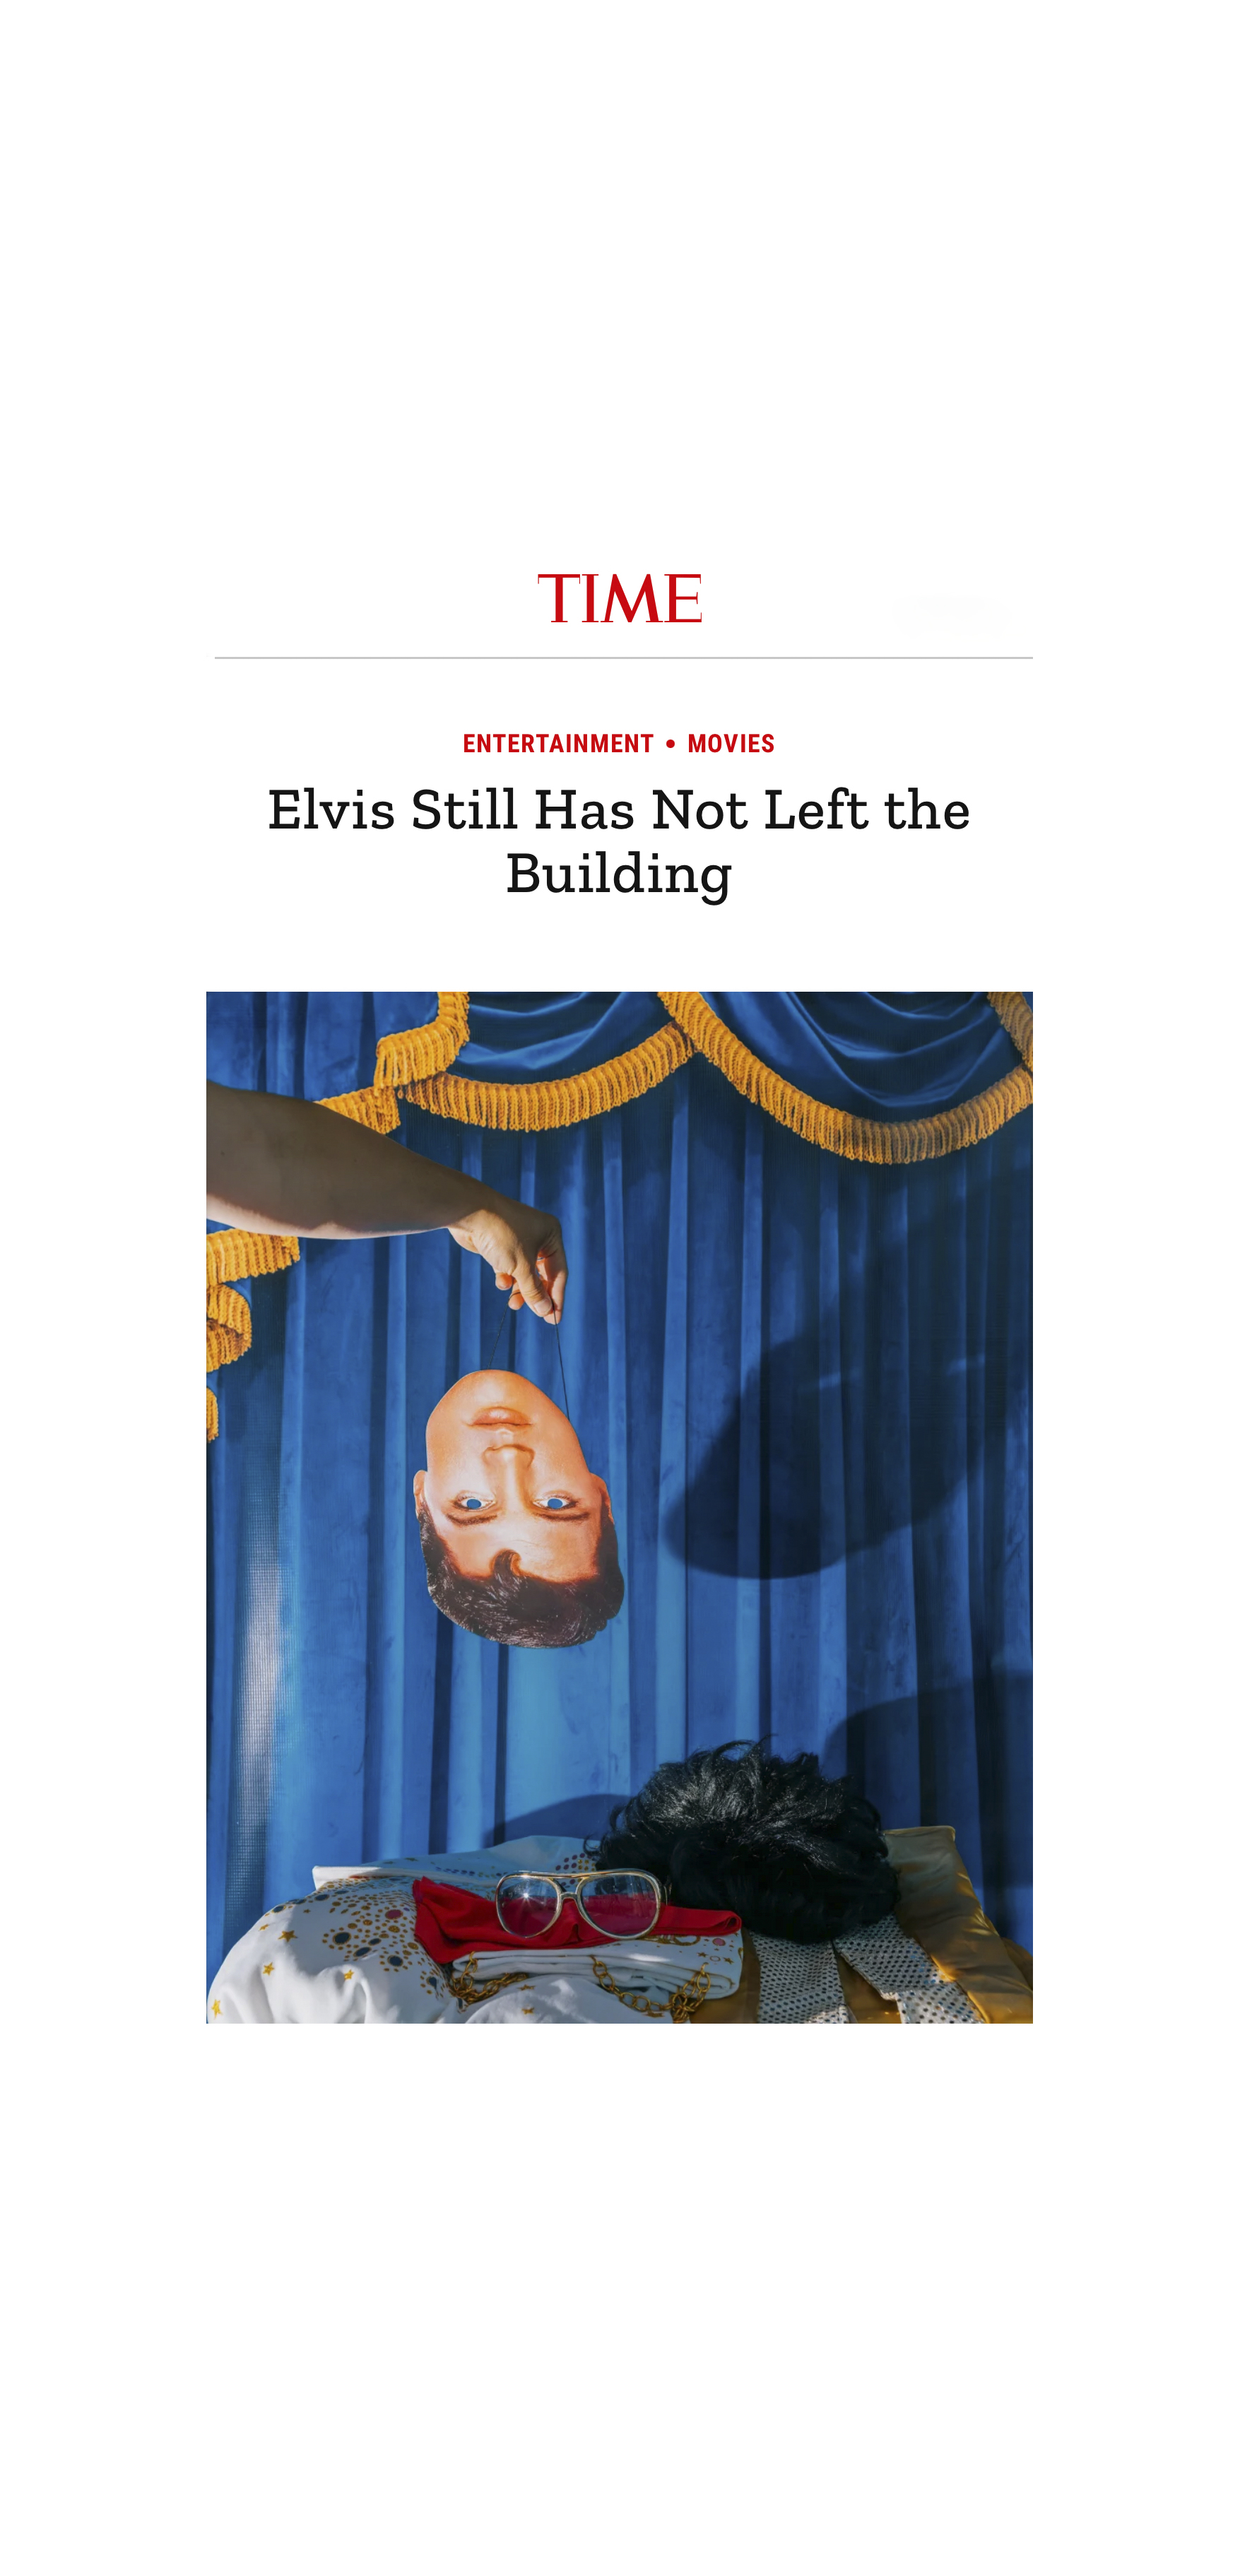 TIME - Elvis Still Has Not Left the Building thumbnail